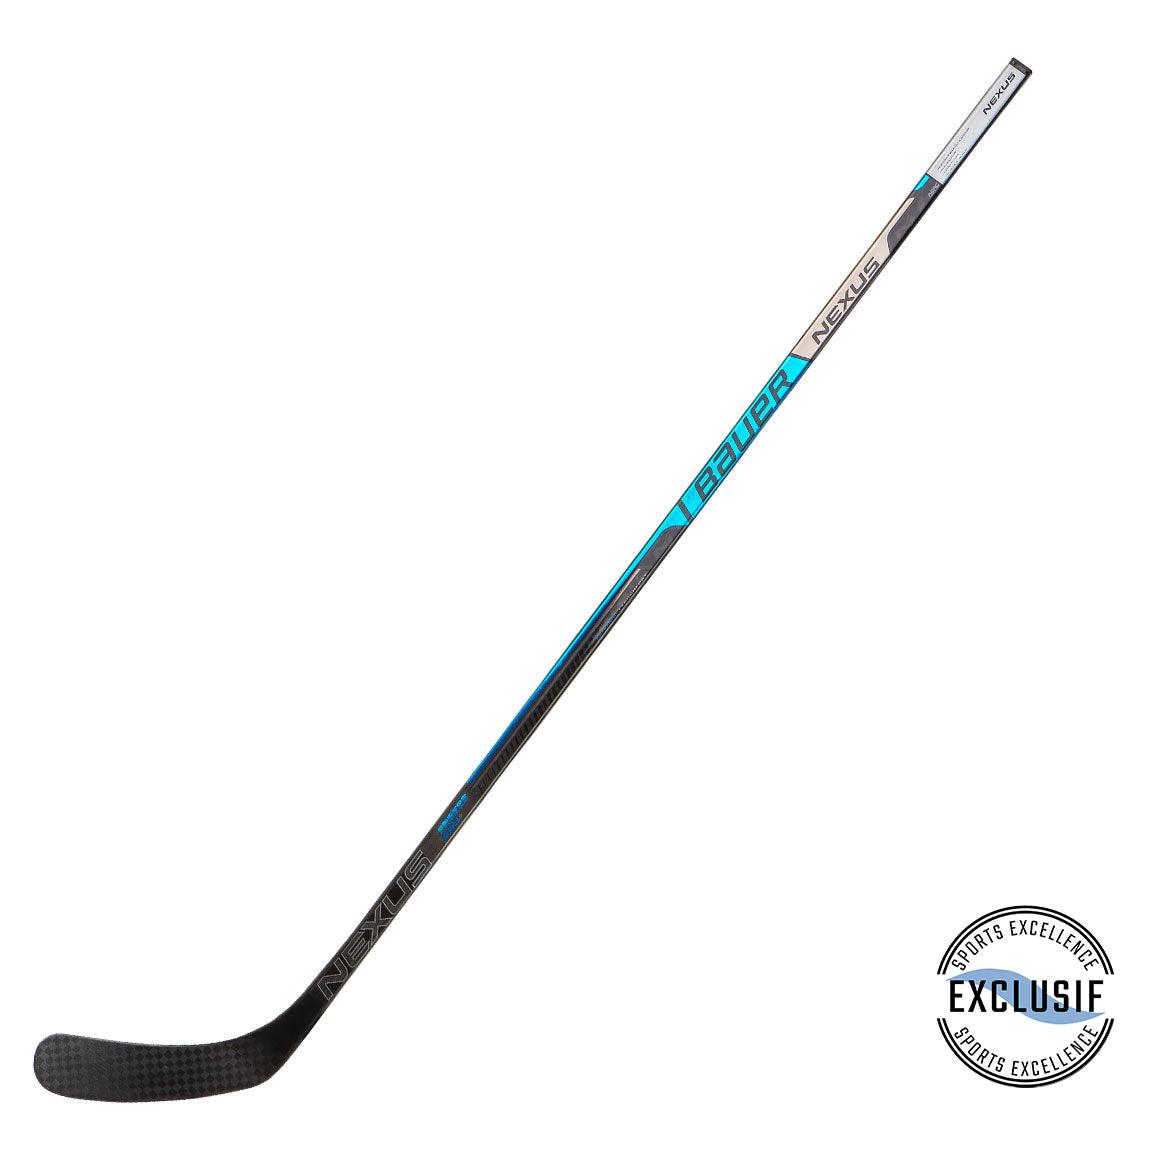 Senior Nexus Freeze Pro Griptac Hockey Stick by Bauer